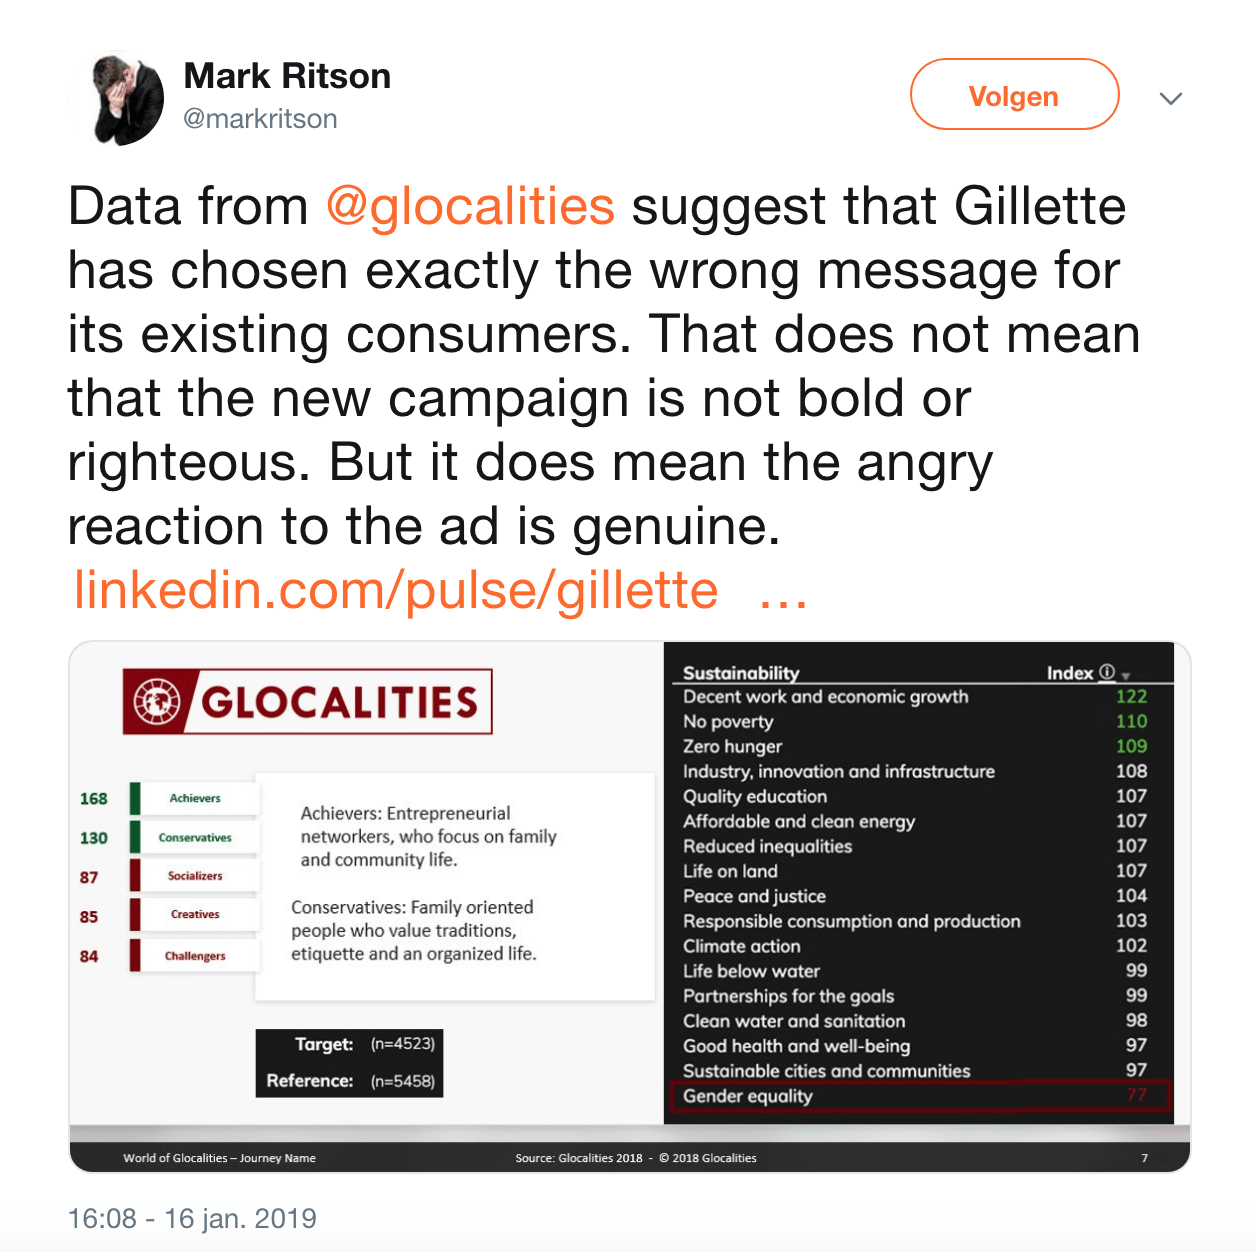 Mark Ritson's tweet on Jan 16th, 2019